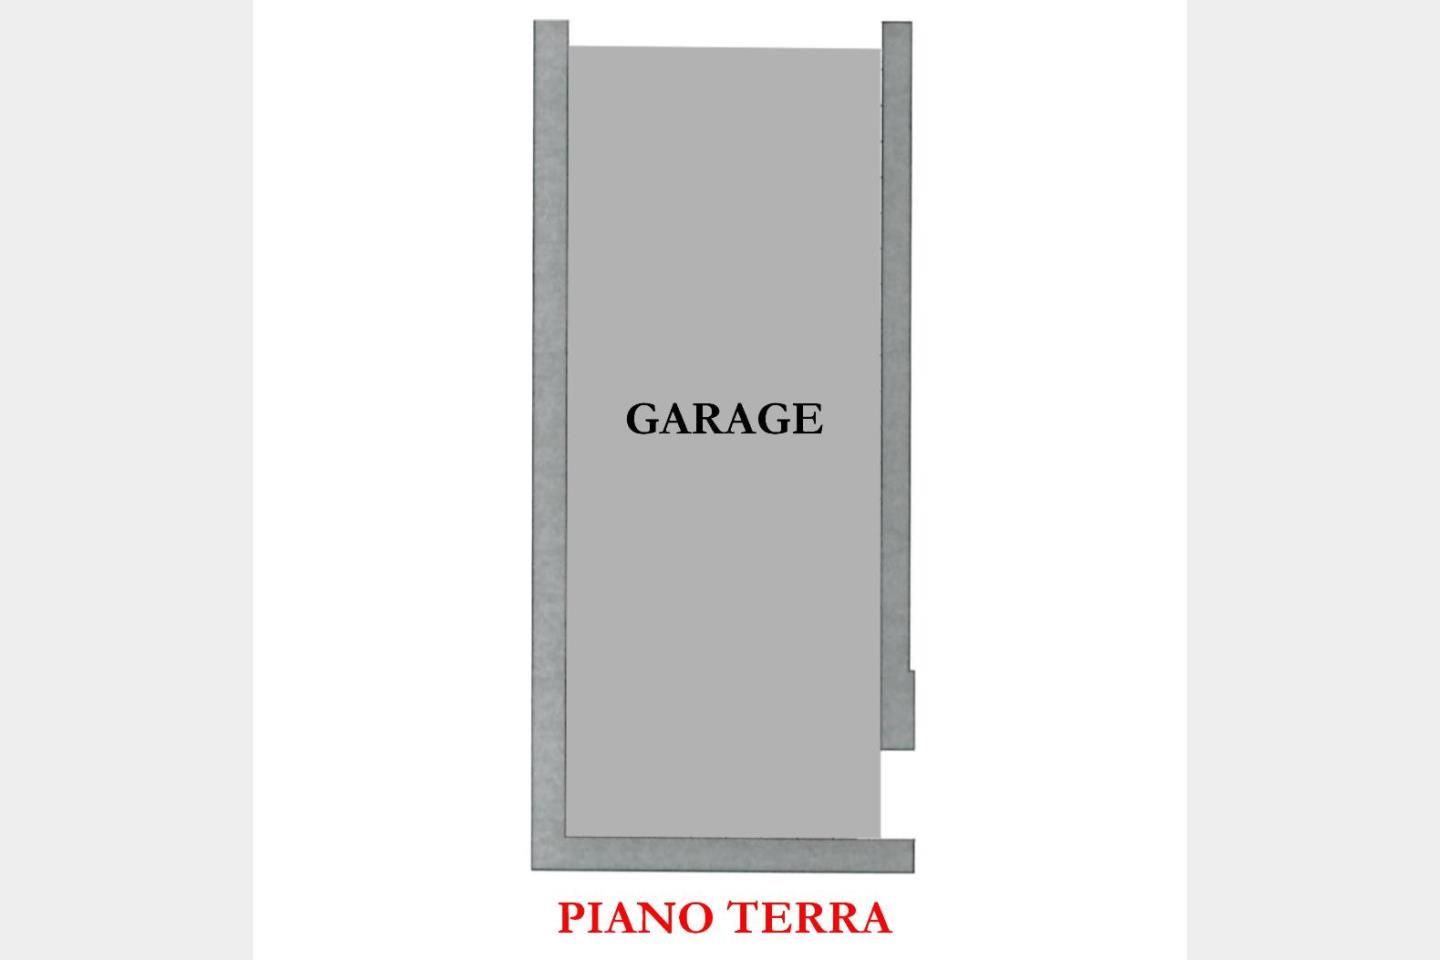 Piano Terra - Garage